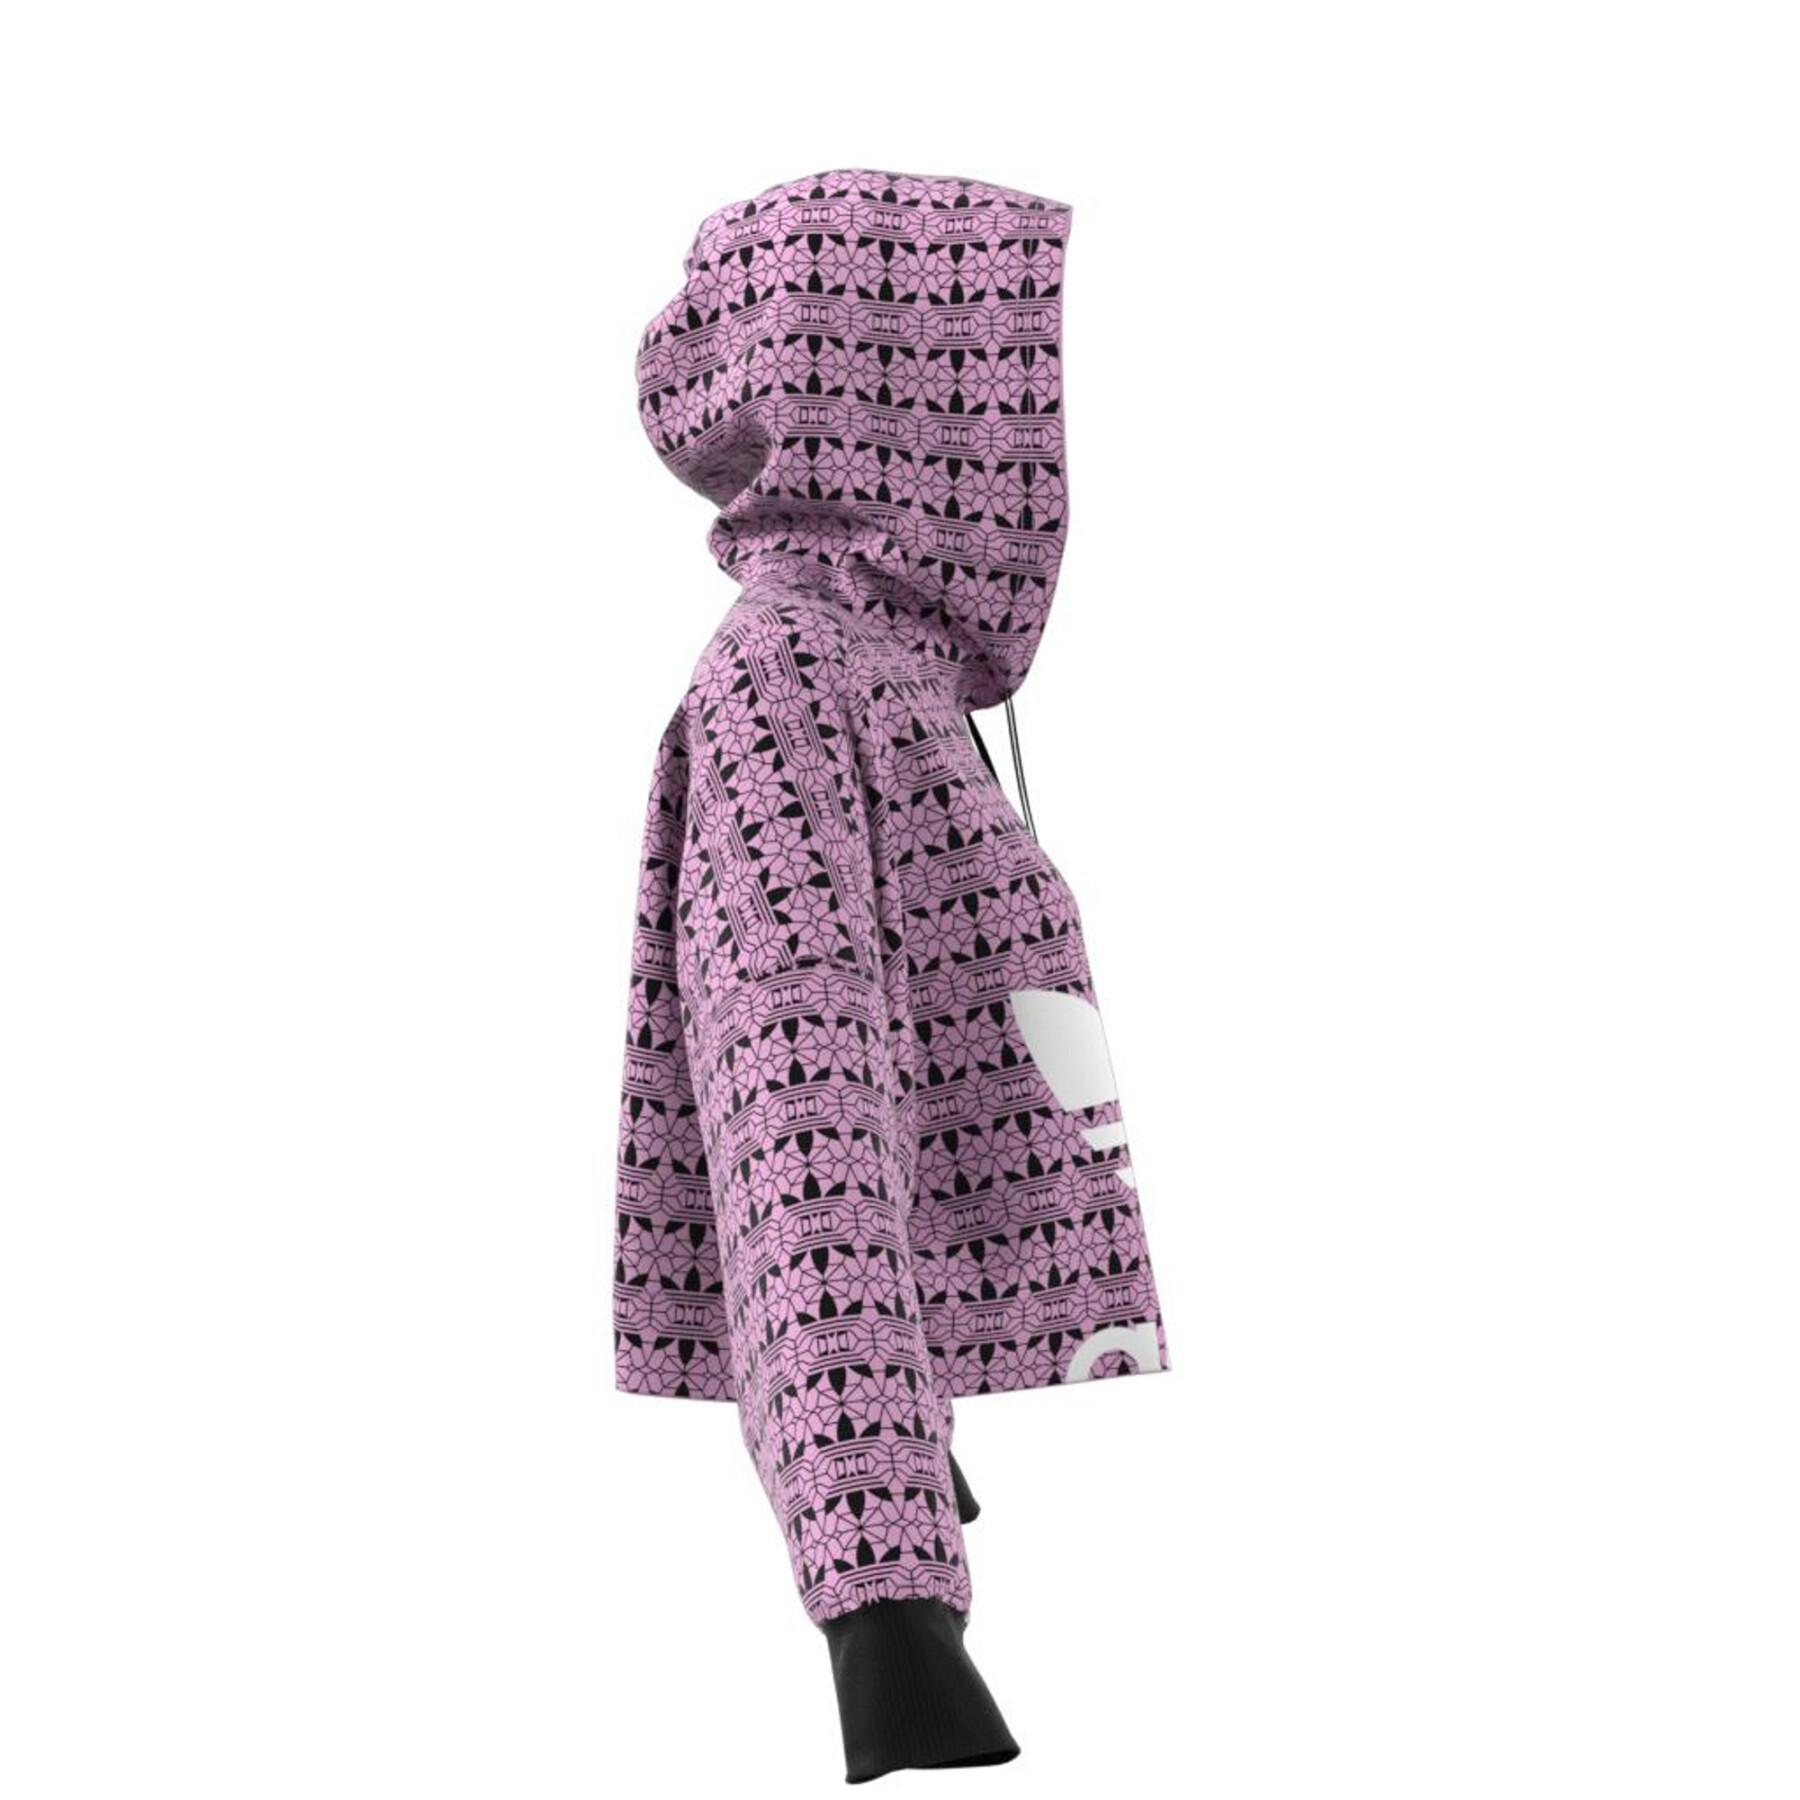 Sudadera con capucha para mujer adidas Originals Trefoil Allover Print